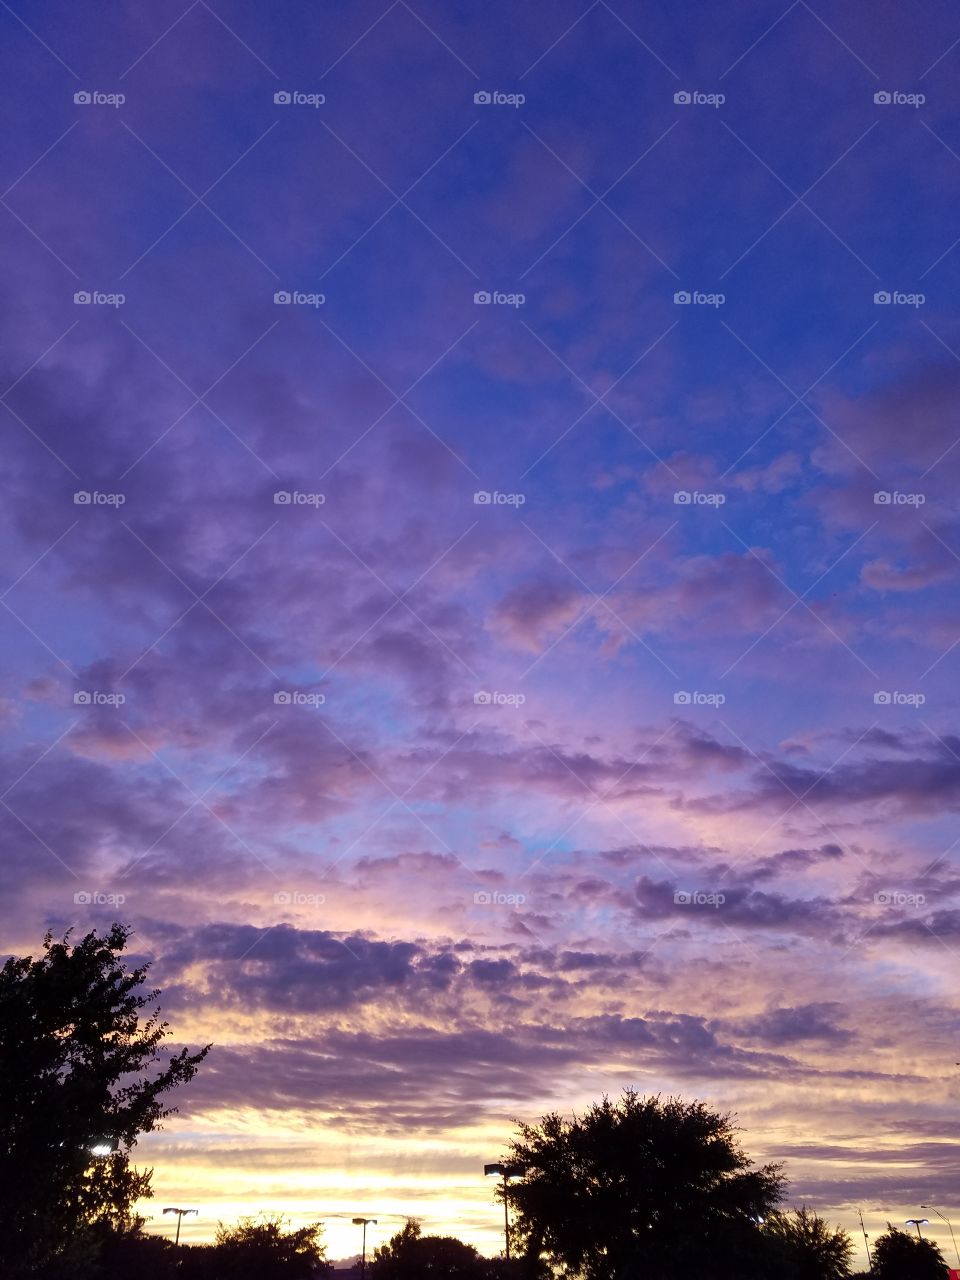 Texas sky at night